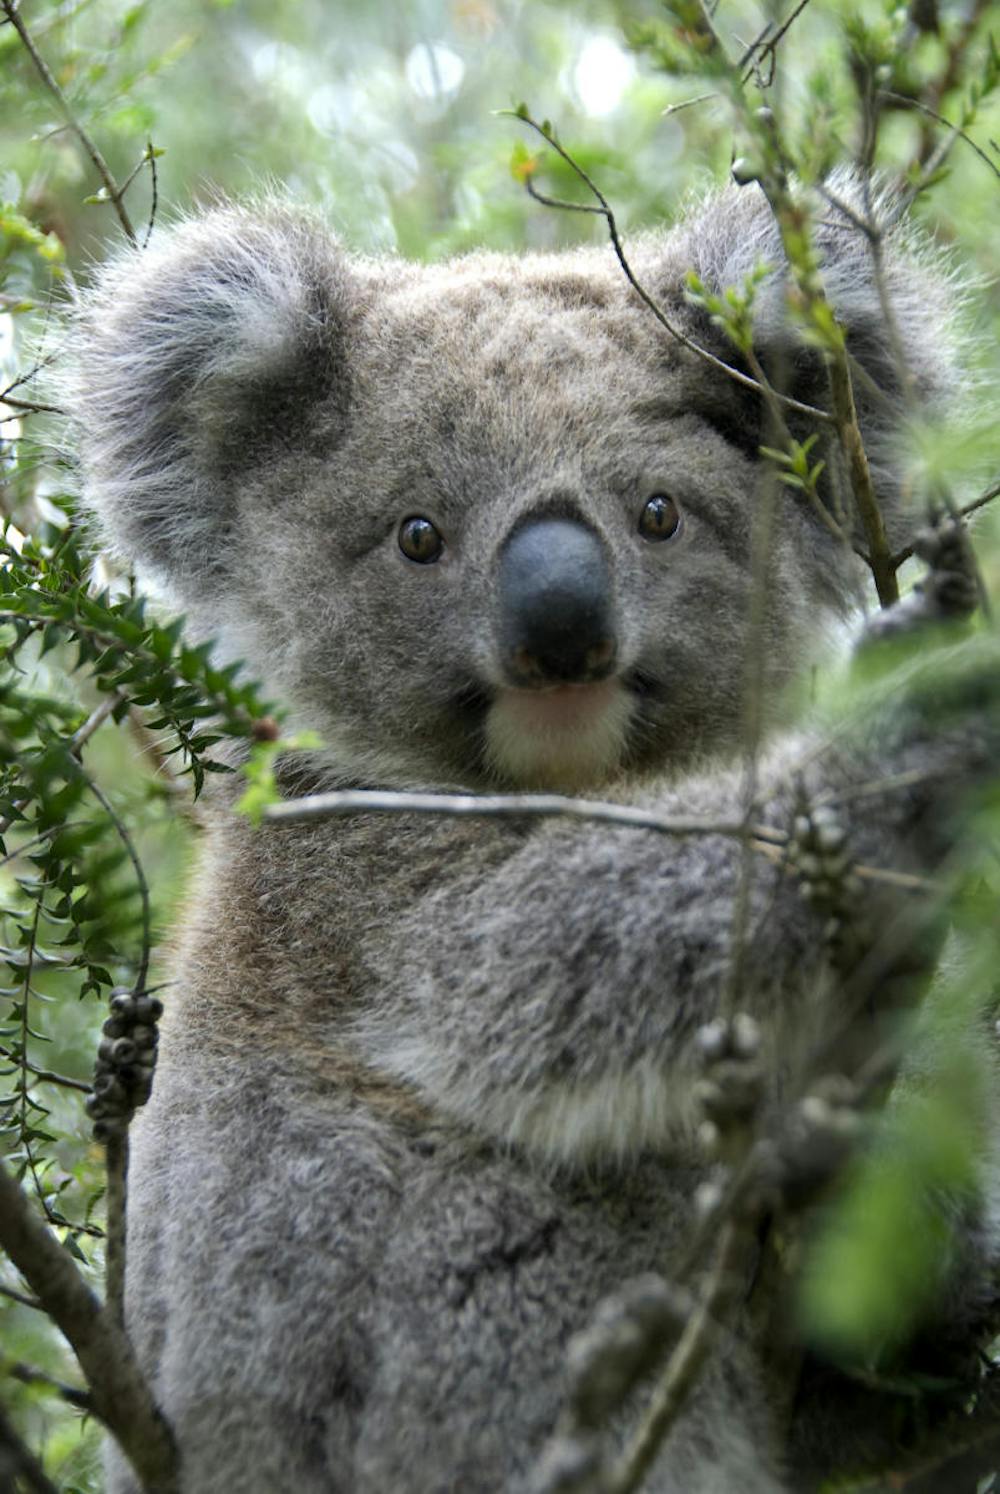 Tree-hugging koalas beat the summer heat